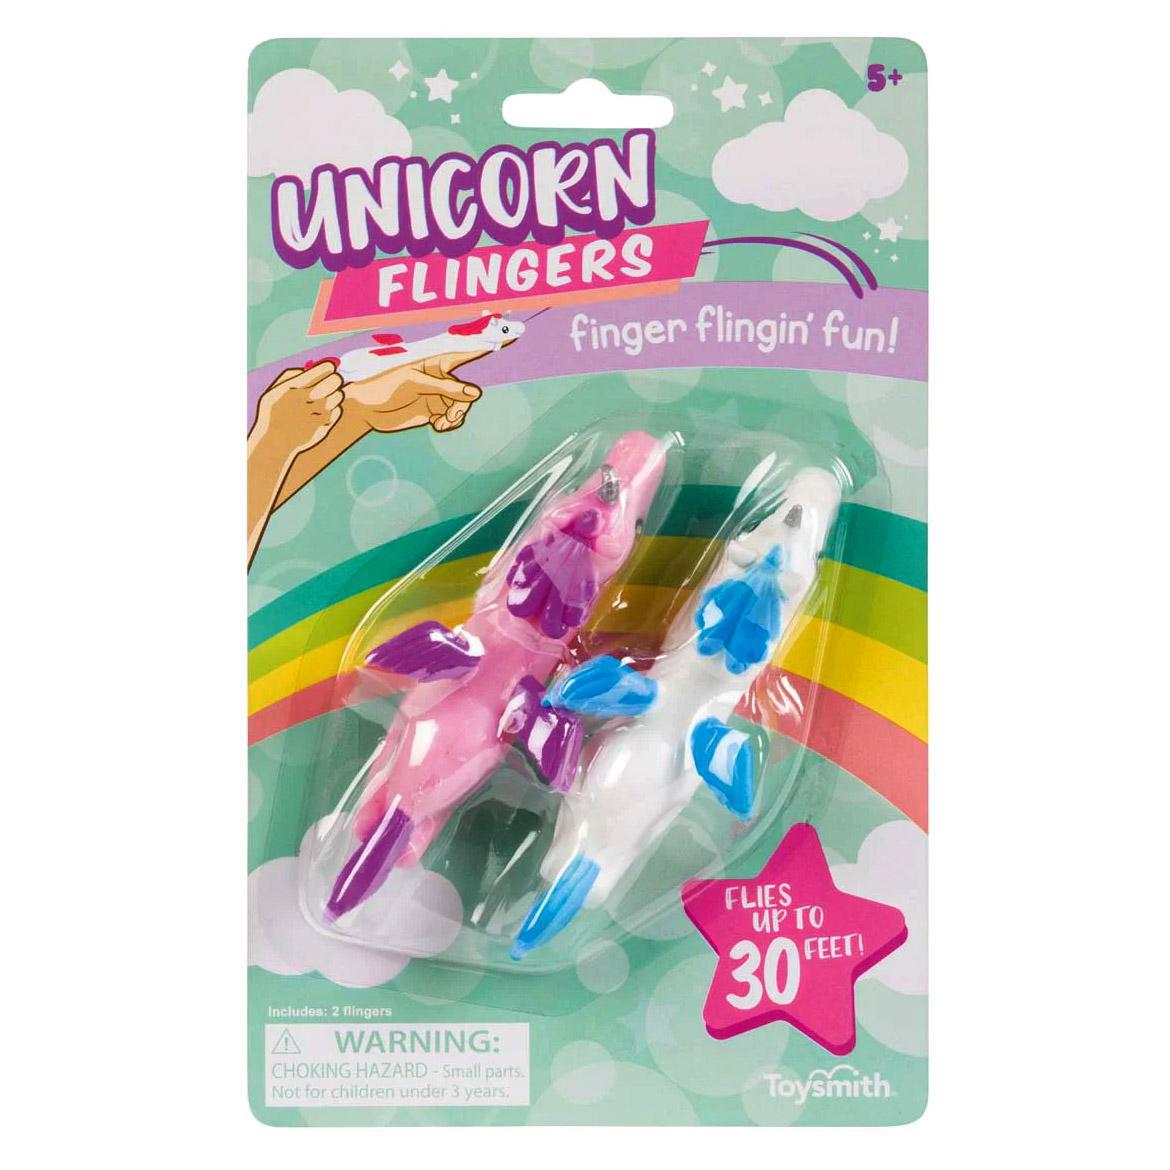 Unicorn Flingers: Magical Finger Flingin' Fun for Ages 5 and Up!